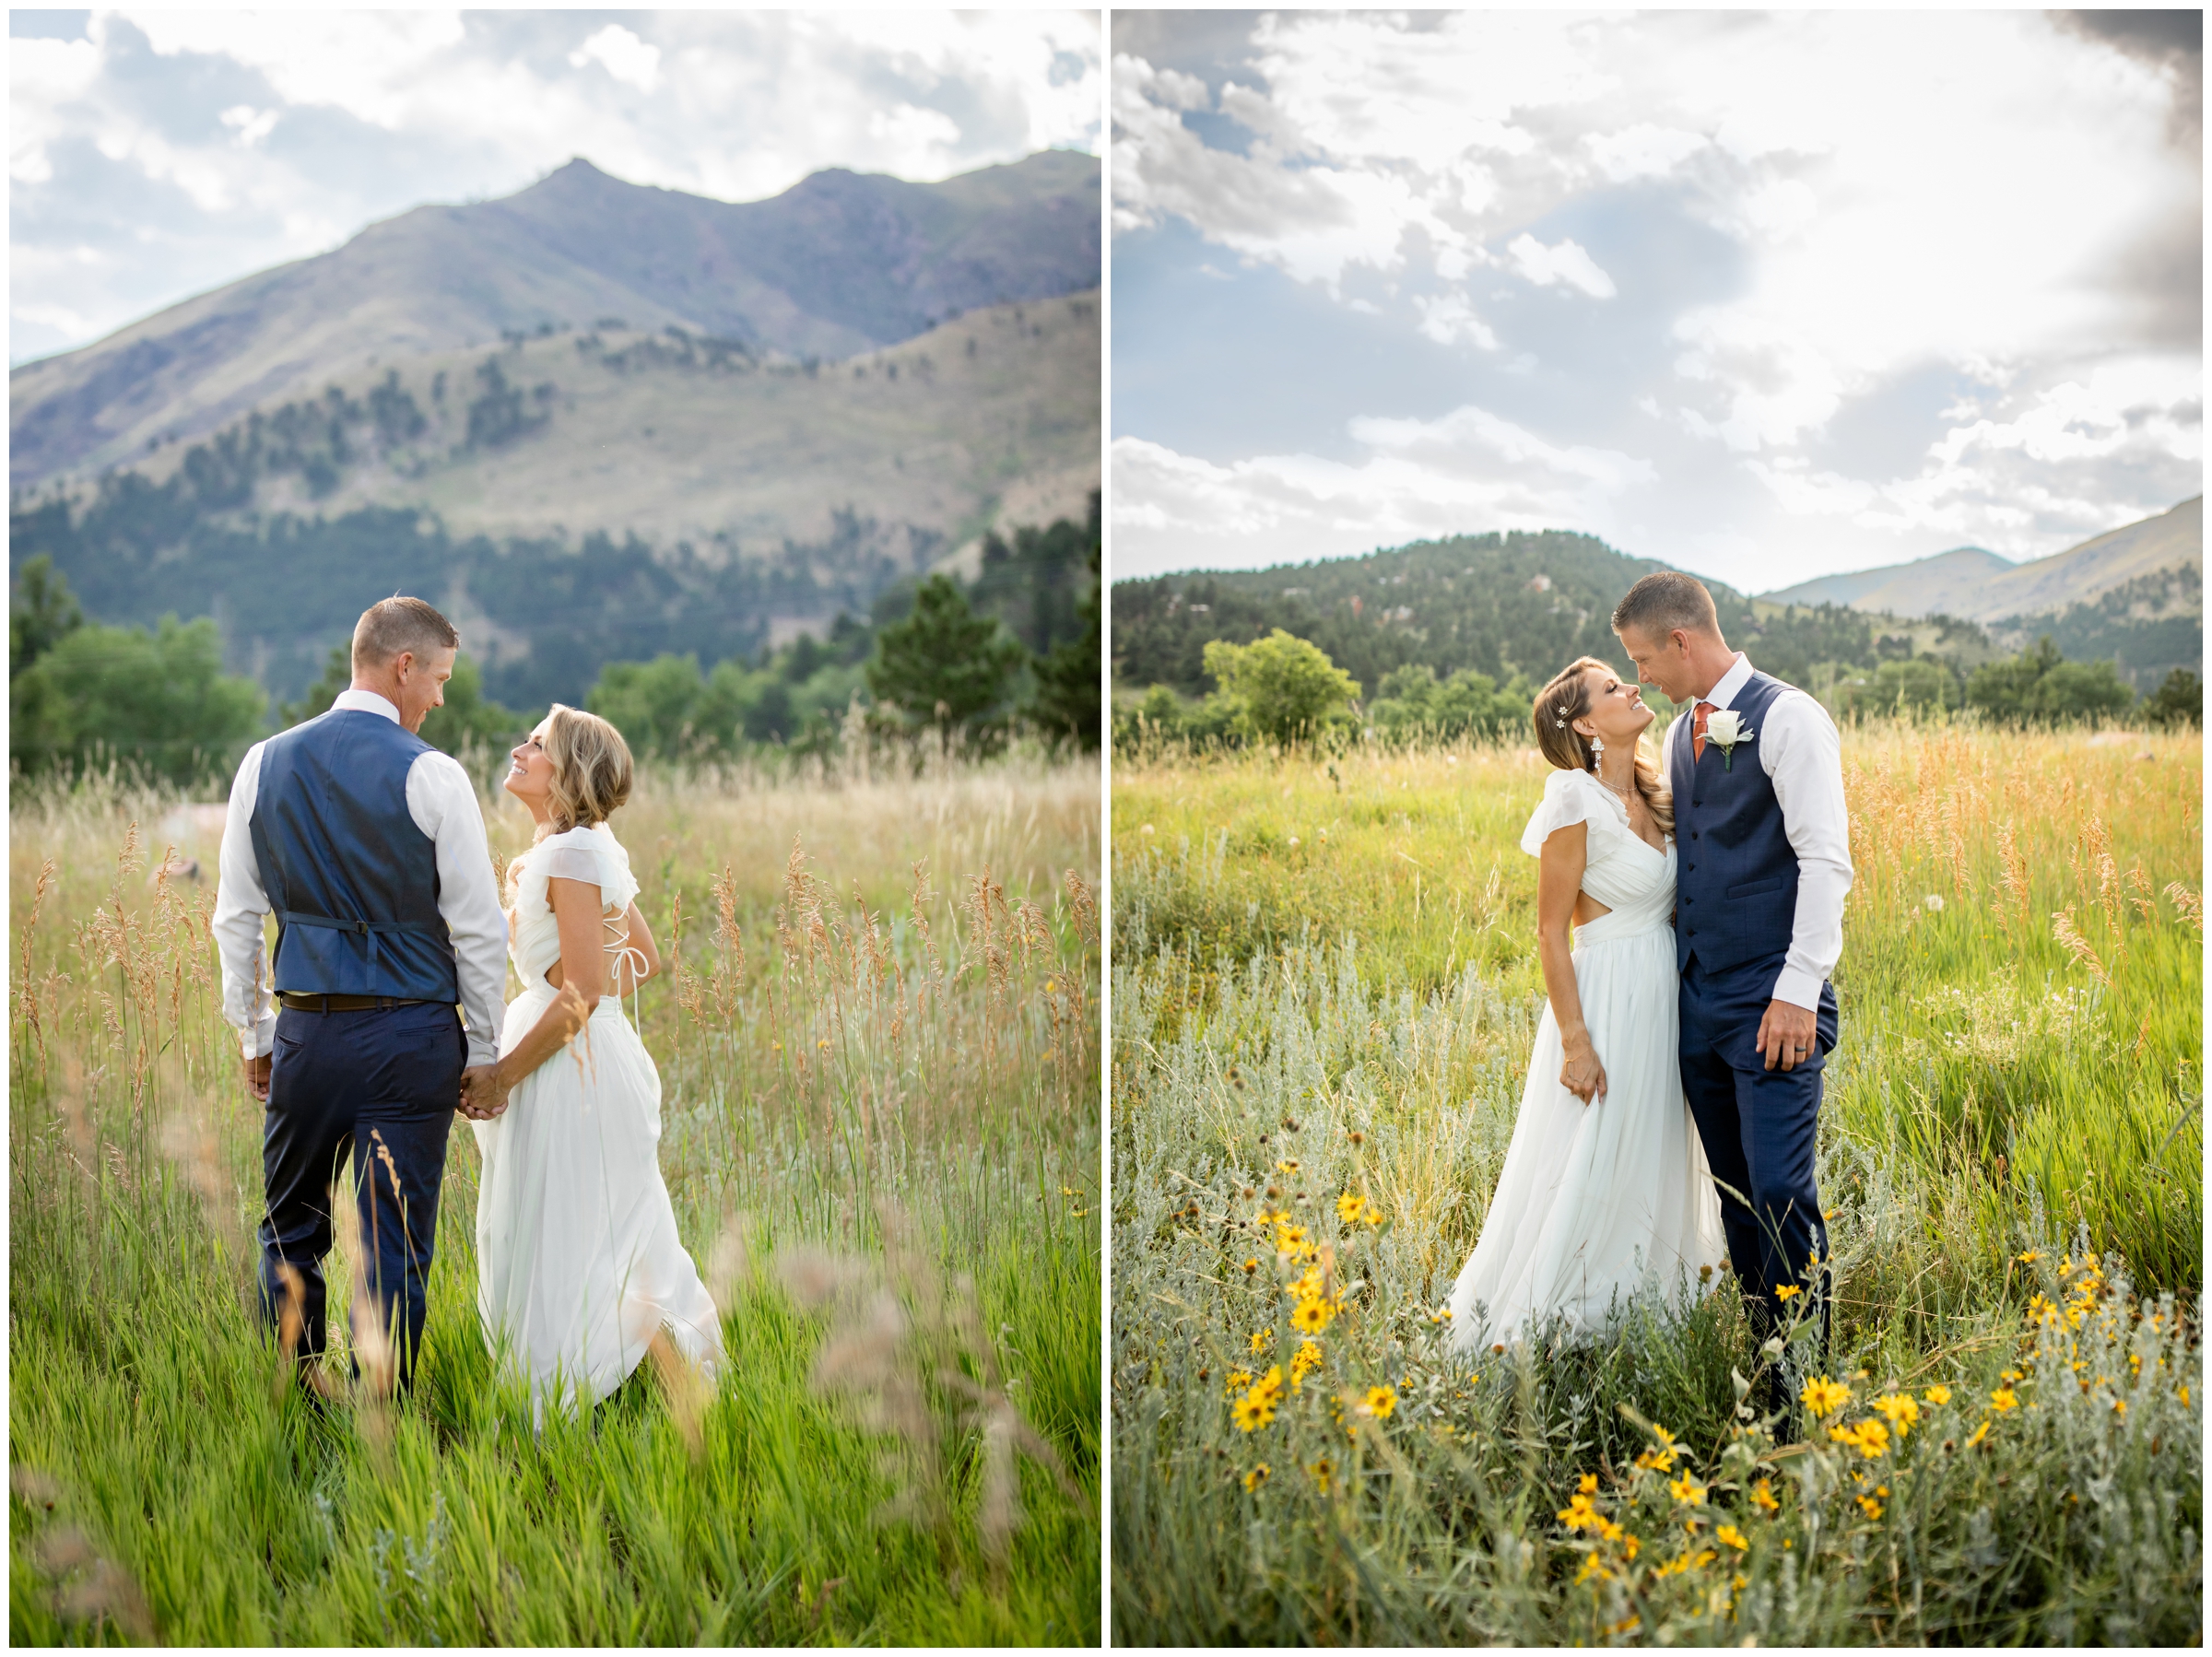 Greenbriar Inn wedding photography by Boulder Colorado photographer Plum Pretty Photography